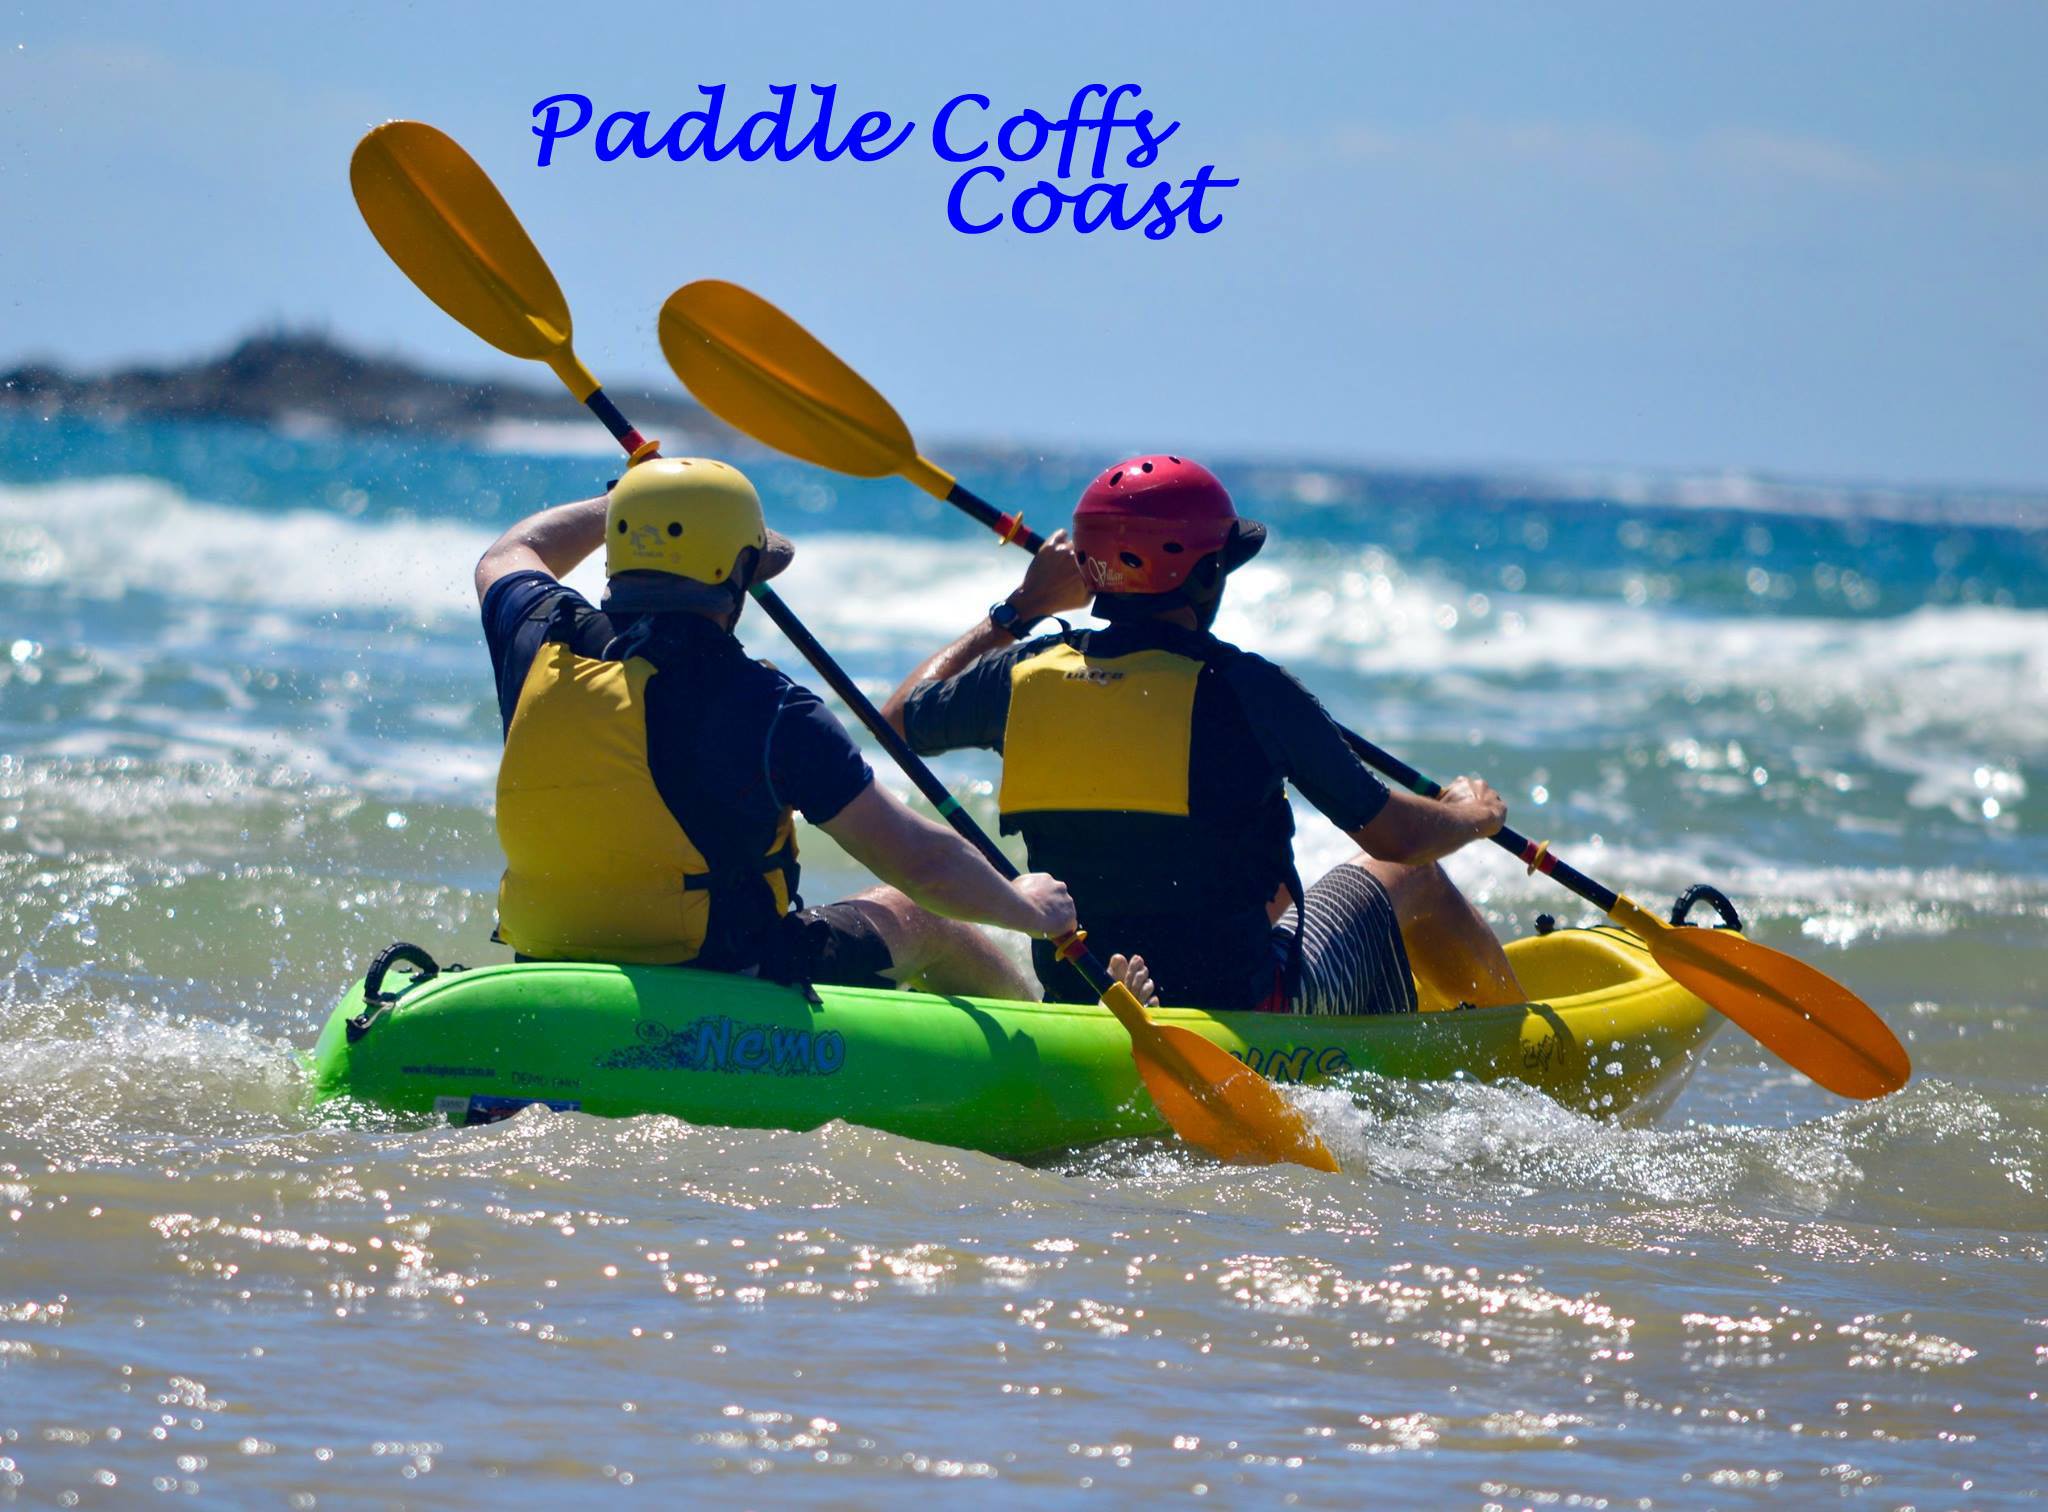 Paddle Coffs coast